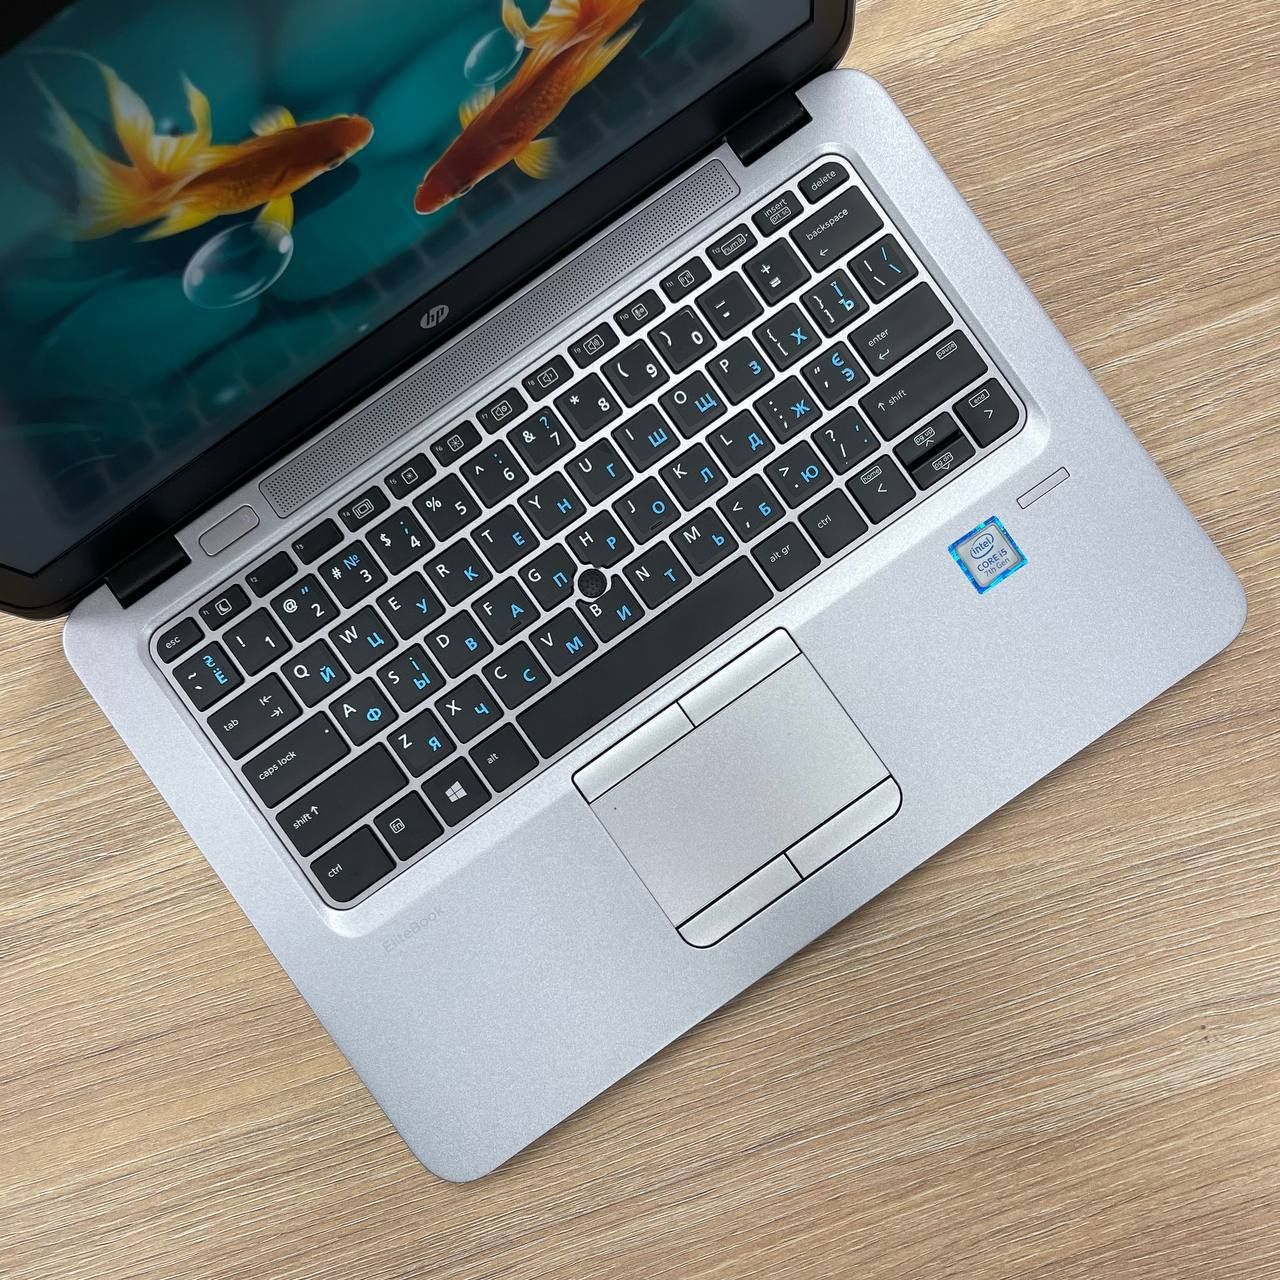 Ноутбук HP 820 g4